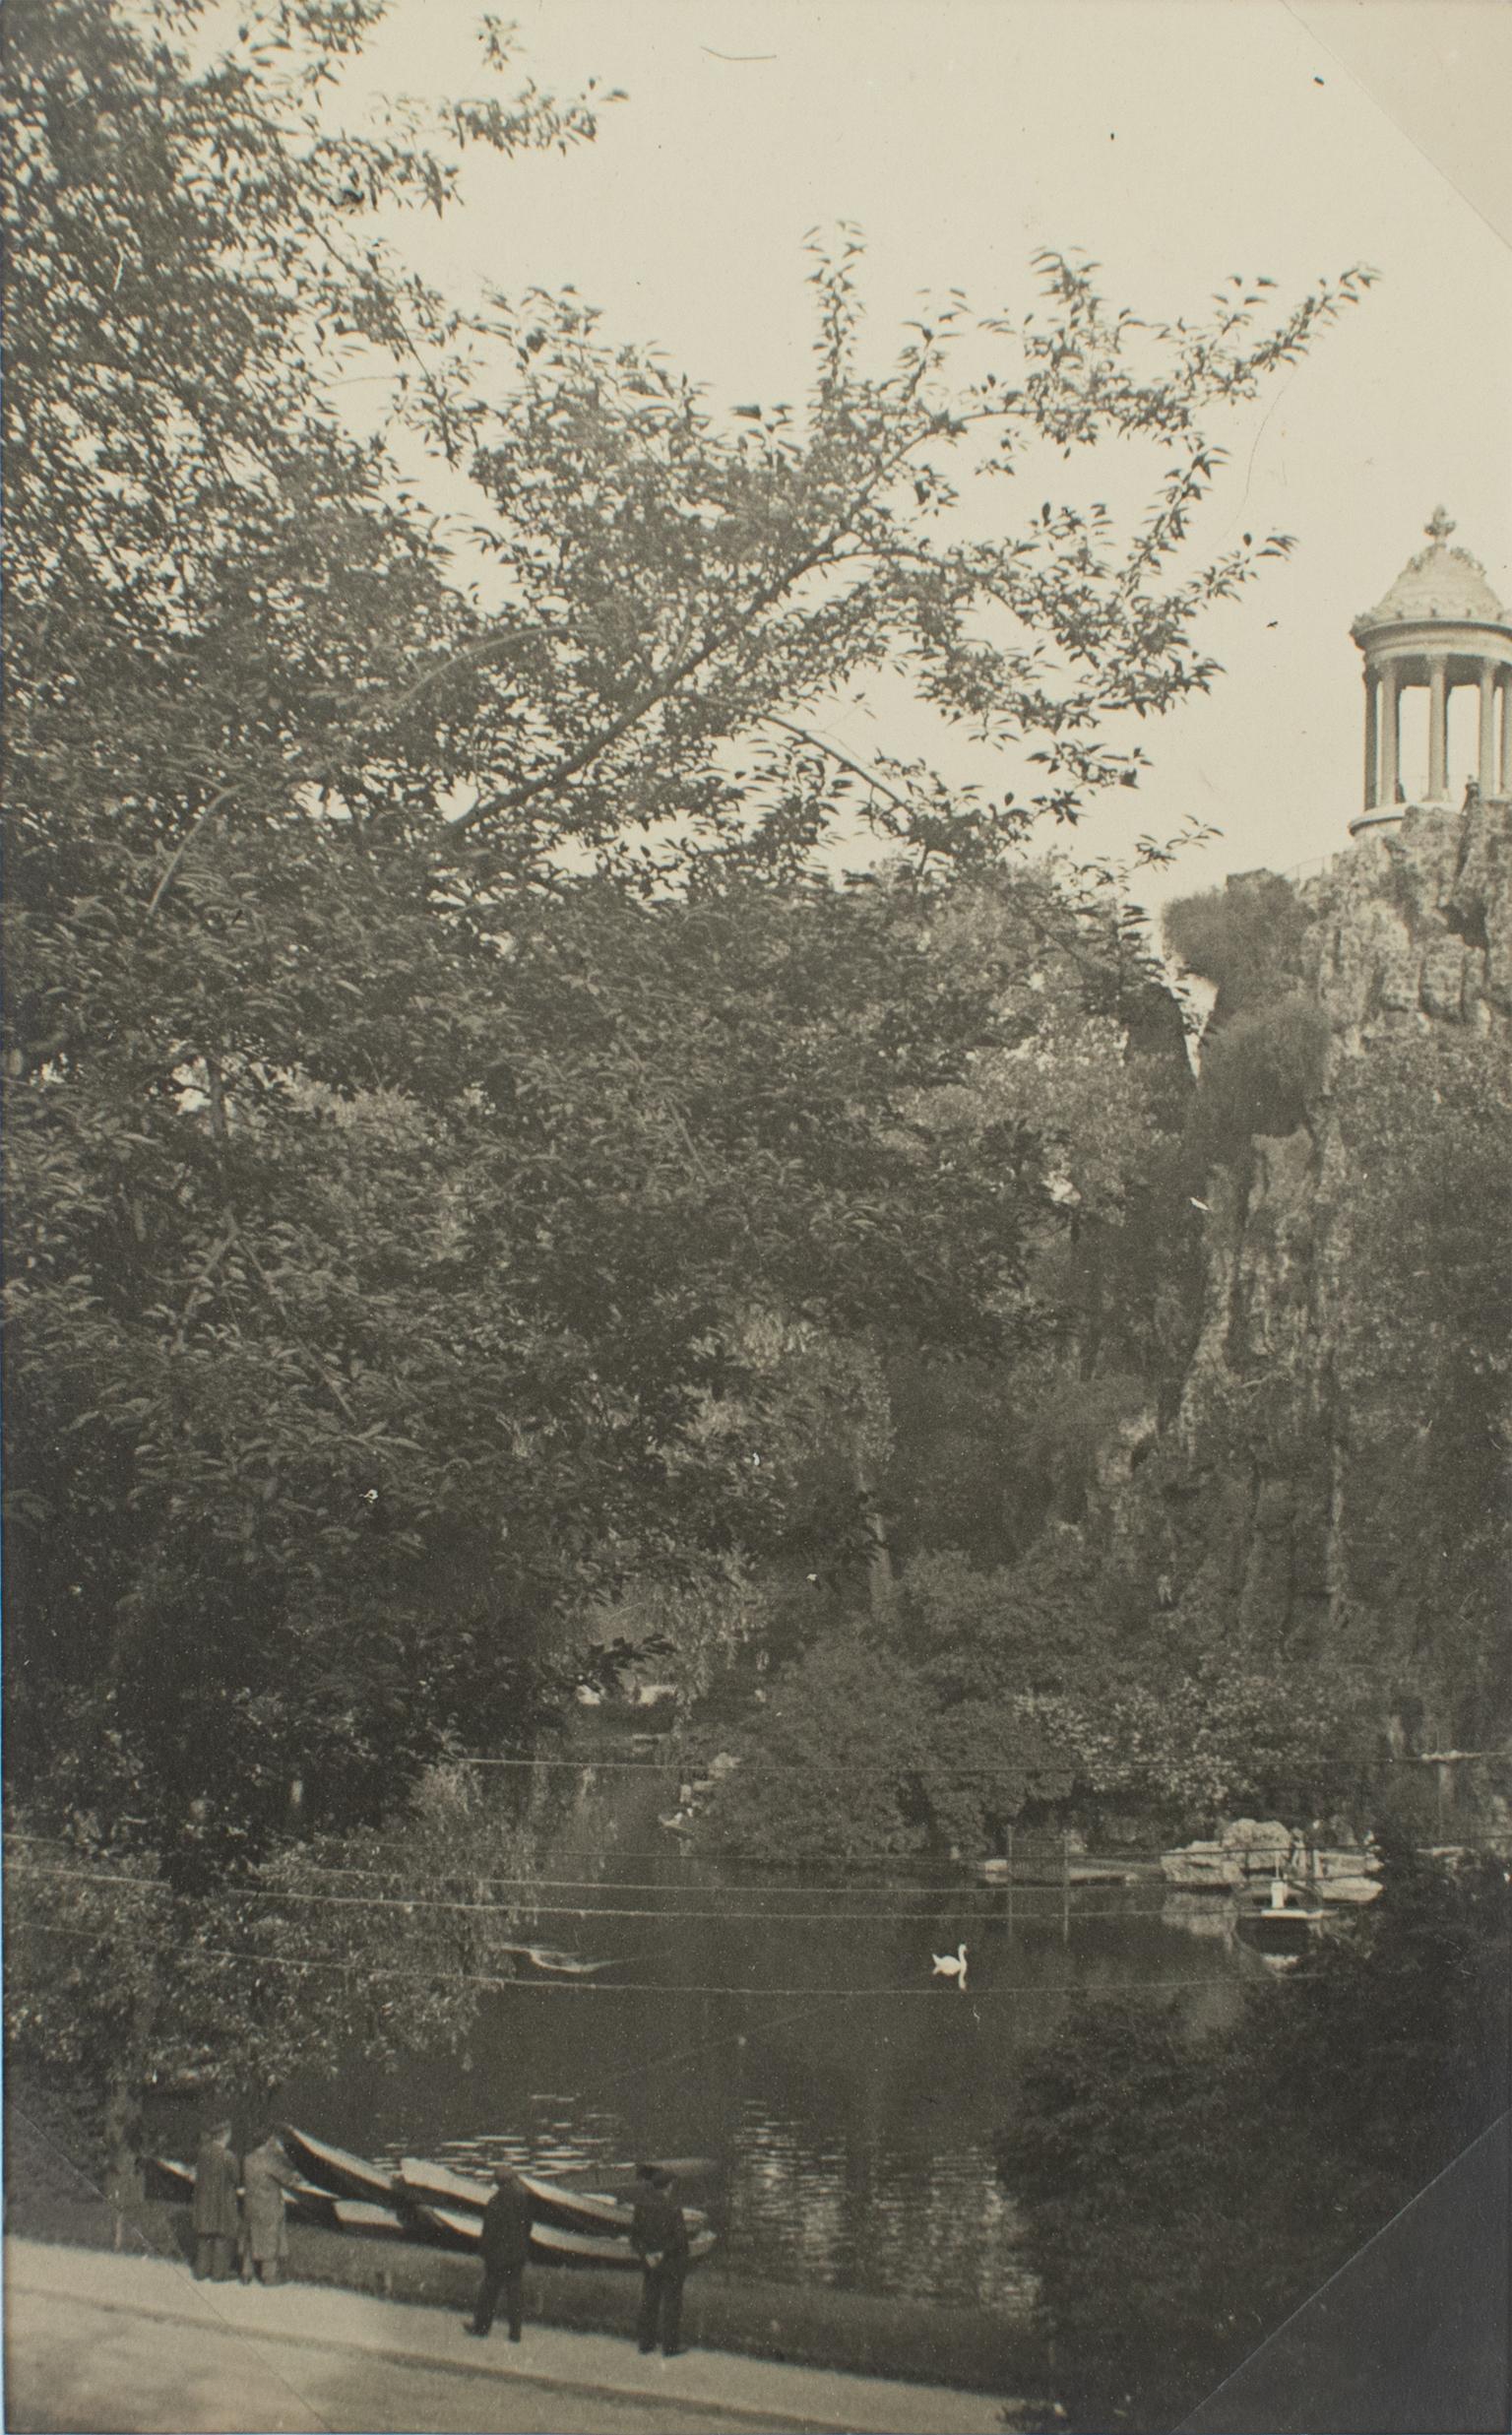 Unknown Landscape Photograph - Paris, The Buttes Chaumont Park 1930, Silver Gelatin Black and White Photography